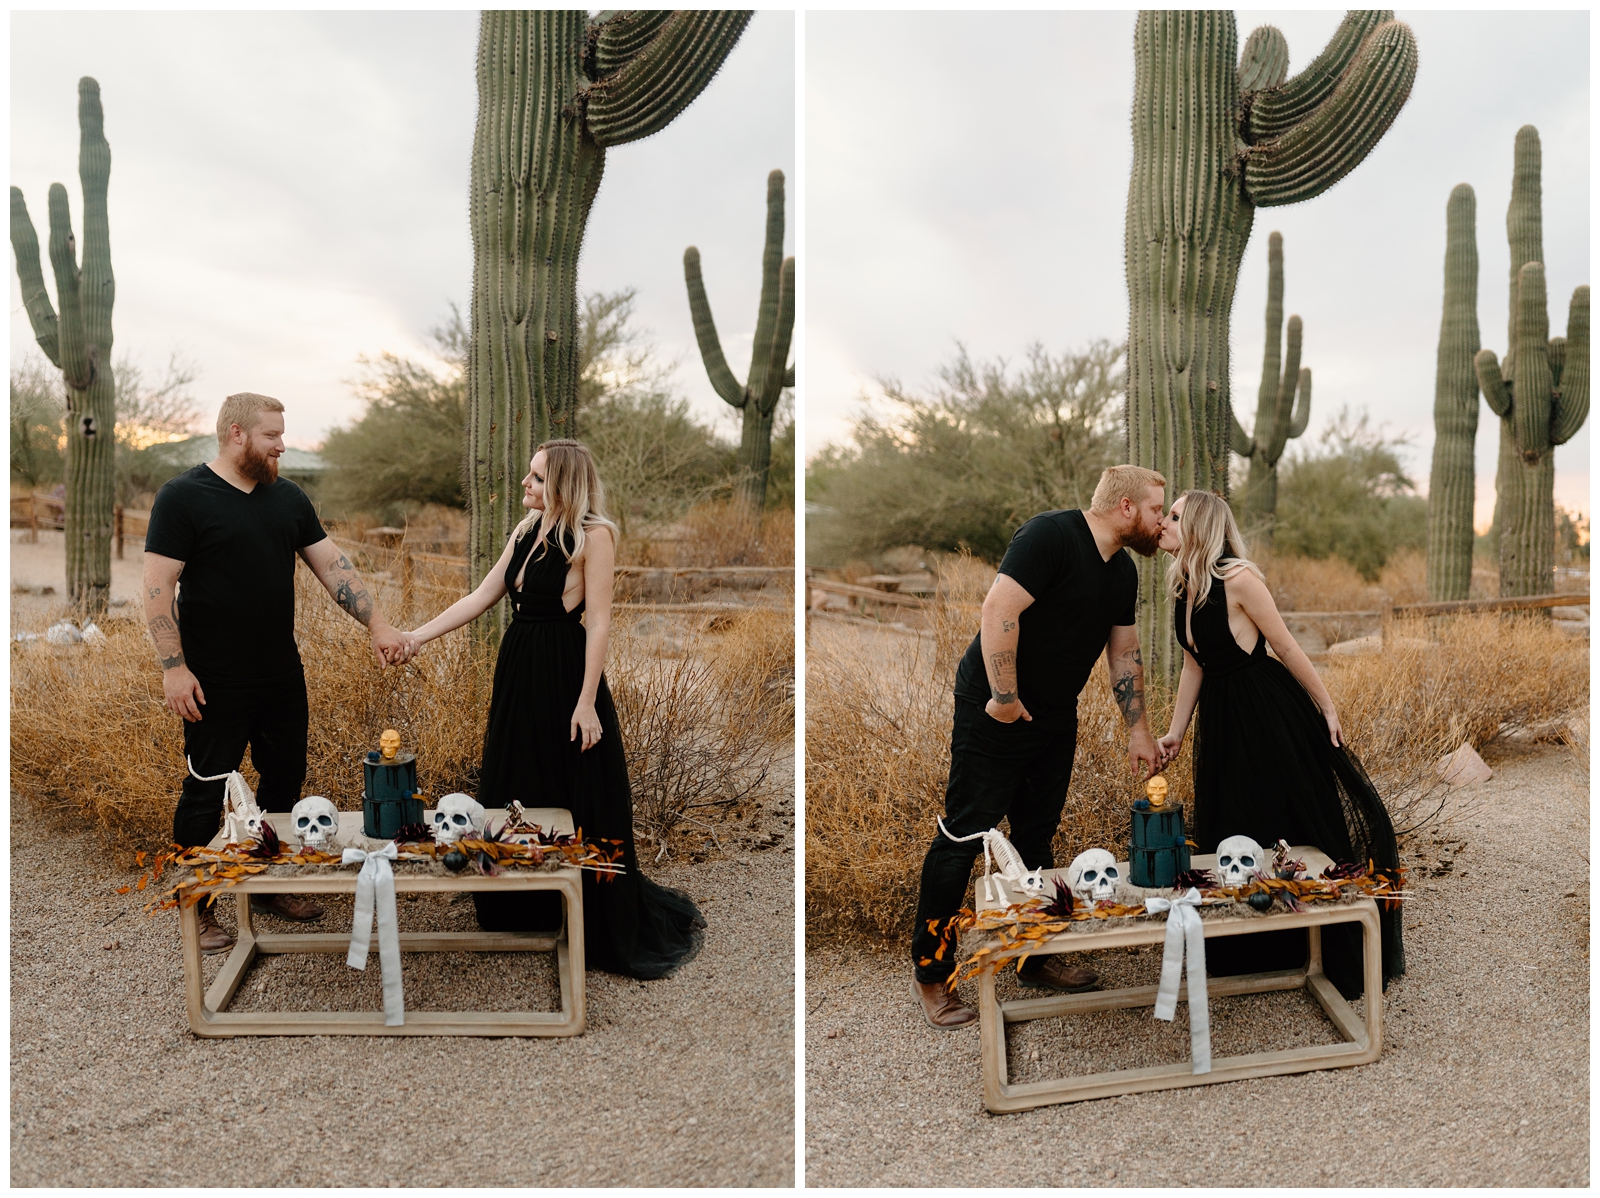 Halloween themed wedding inspiration in Phoenix, AZ by adventurous traveling photographer